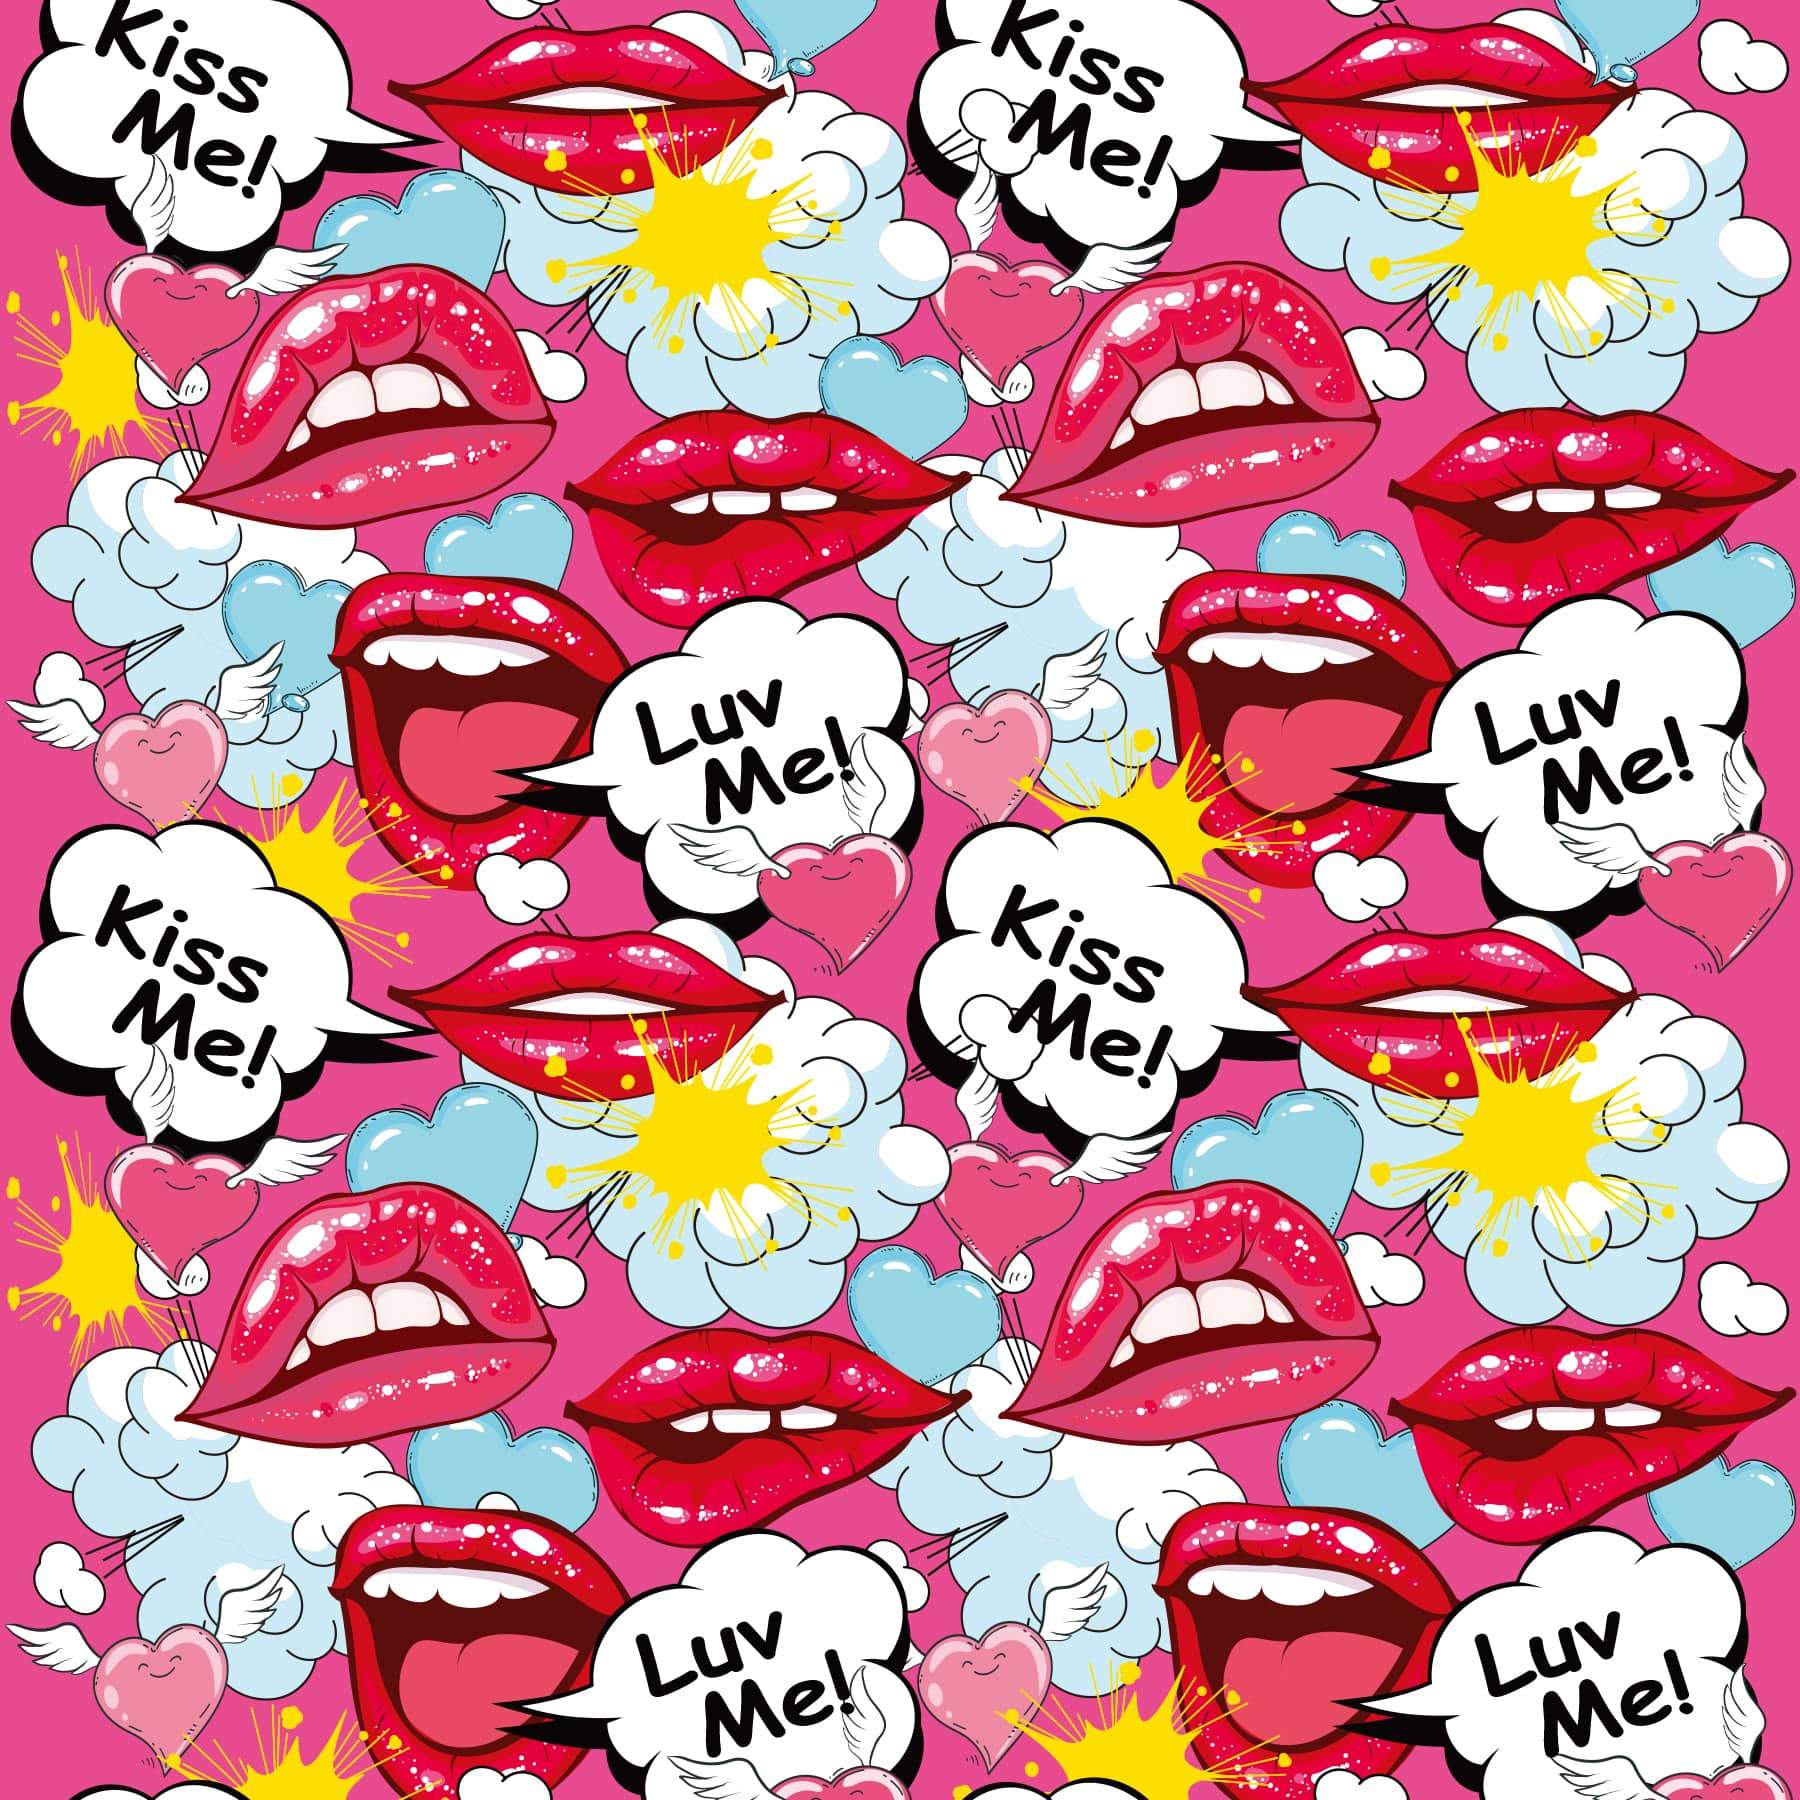 Prints Charming Pop Tease 7" Classic Vibrator, Kiss Me, Pink w/storage bag - The Happy Ending Shop